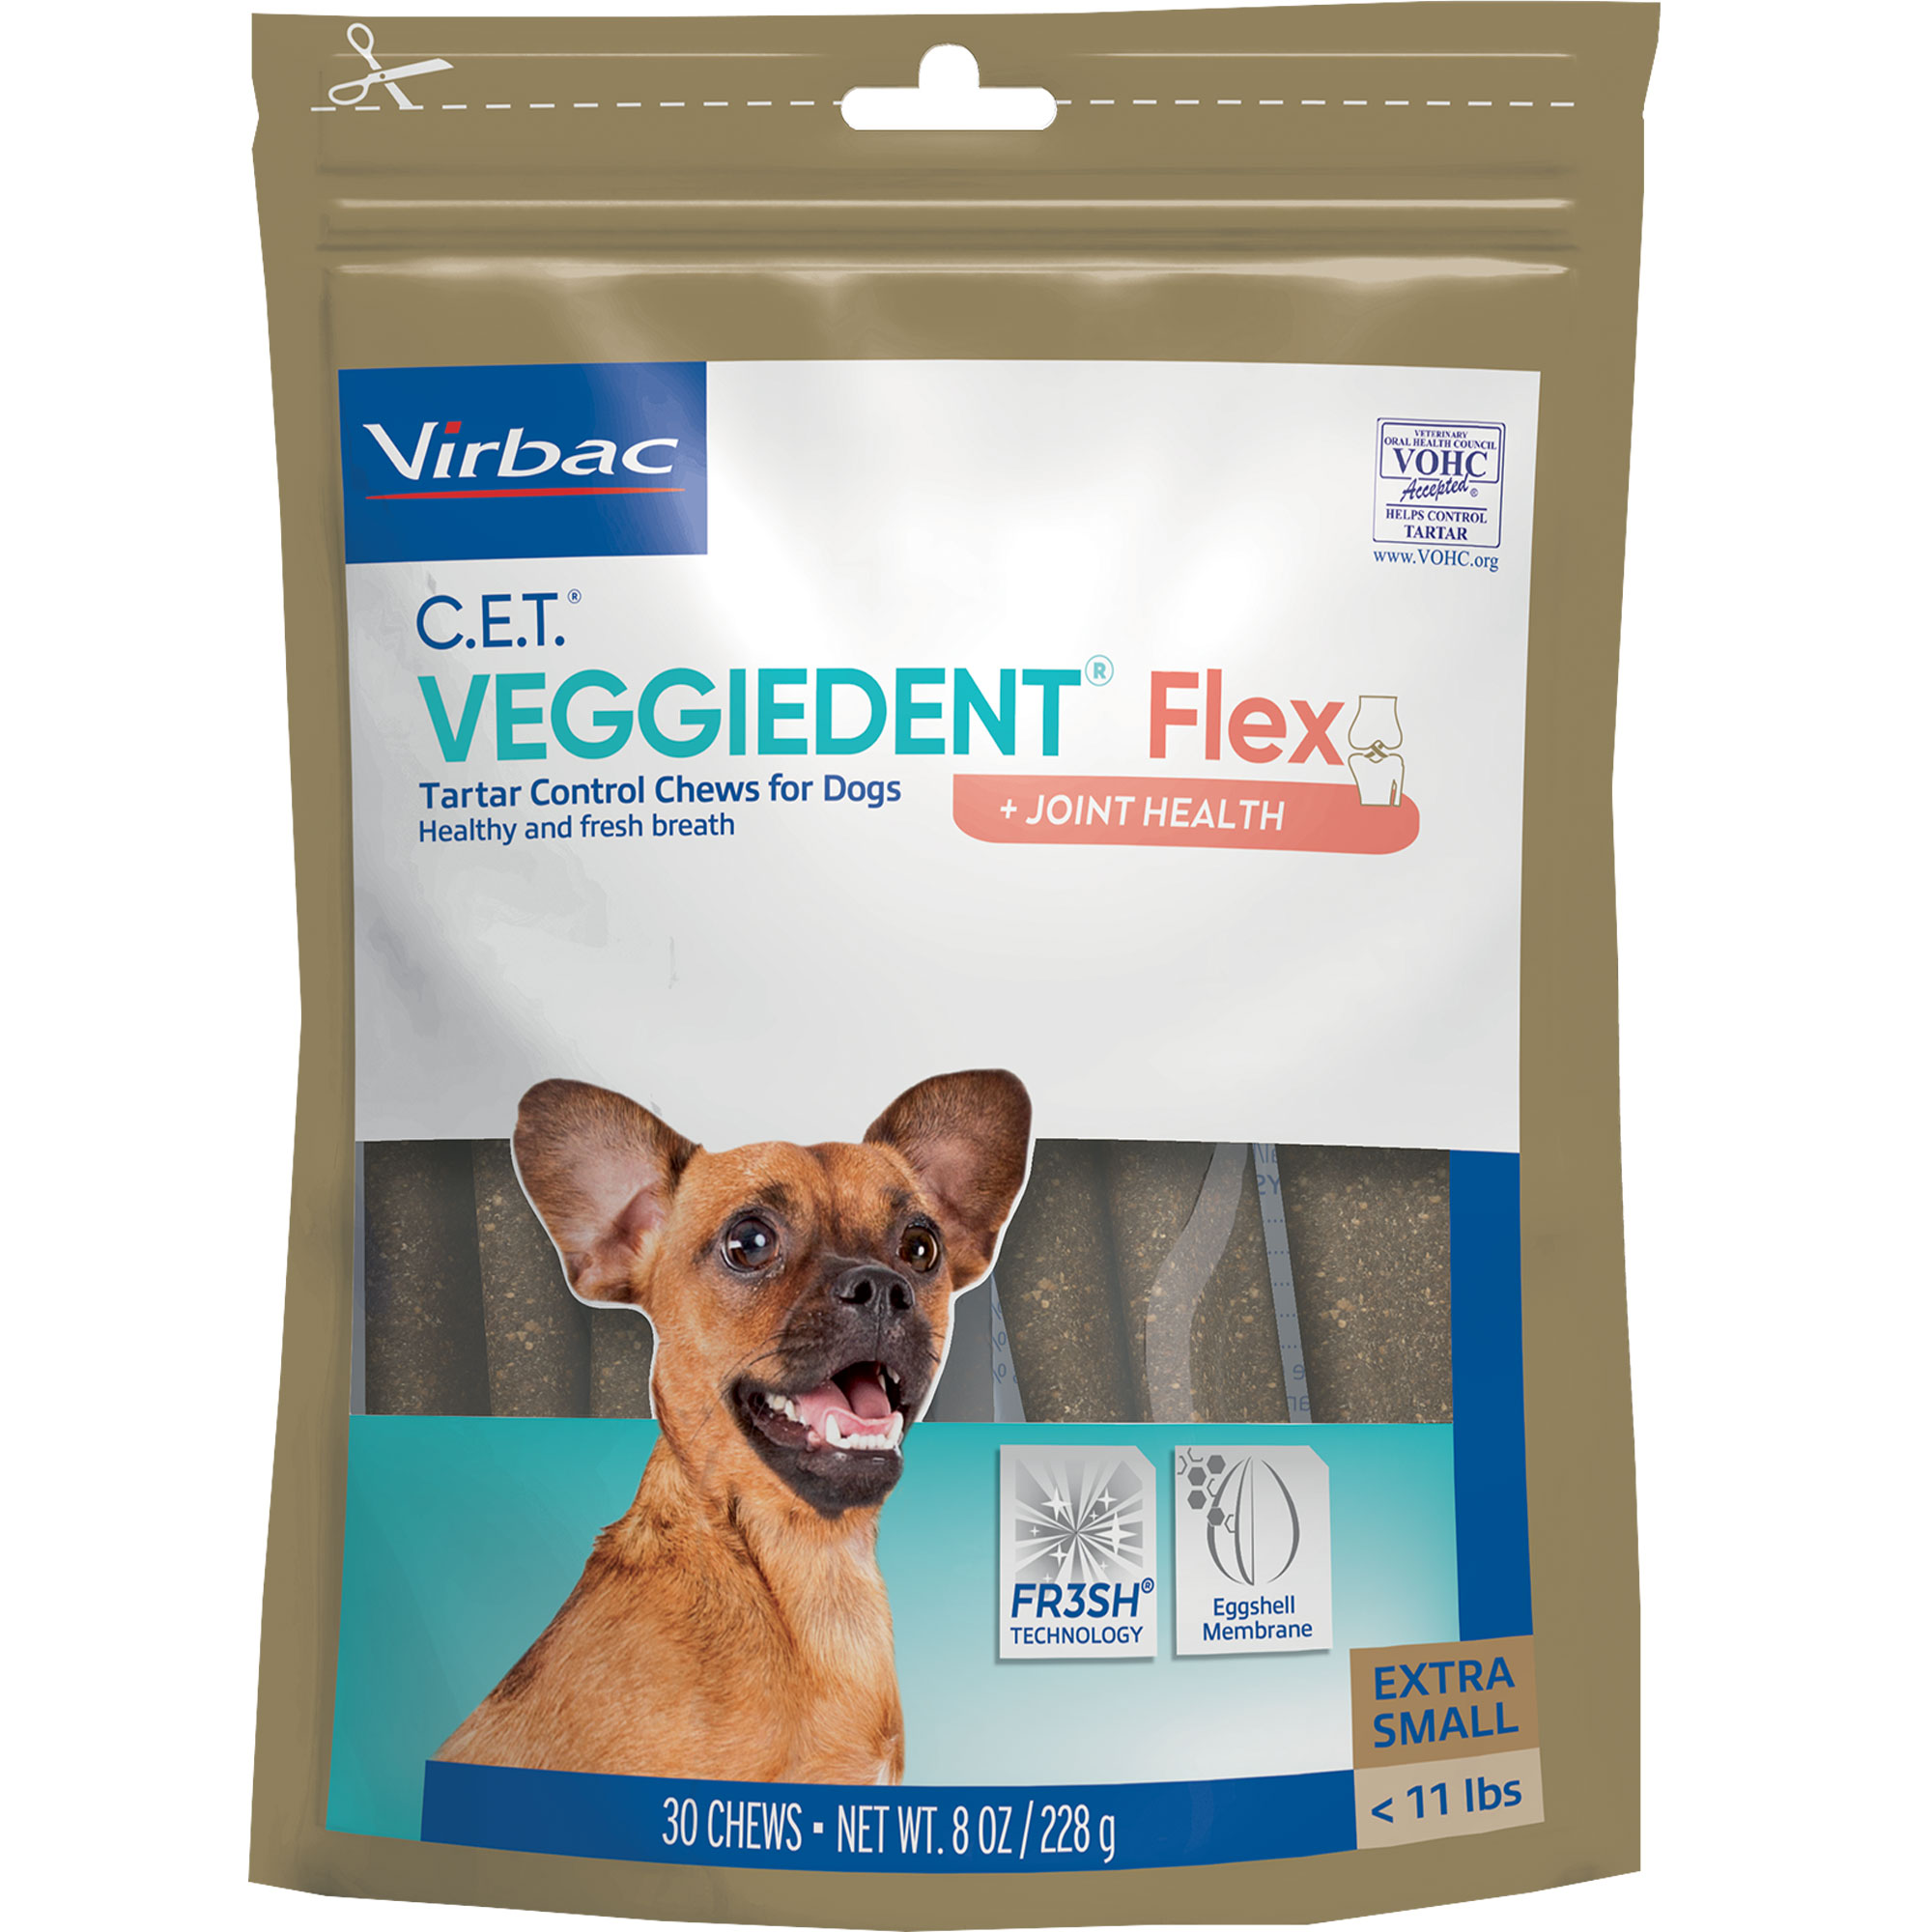 C.E.T. VEGGIEDENT Flex Tartar Control Chews for Dogs Usage